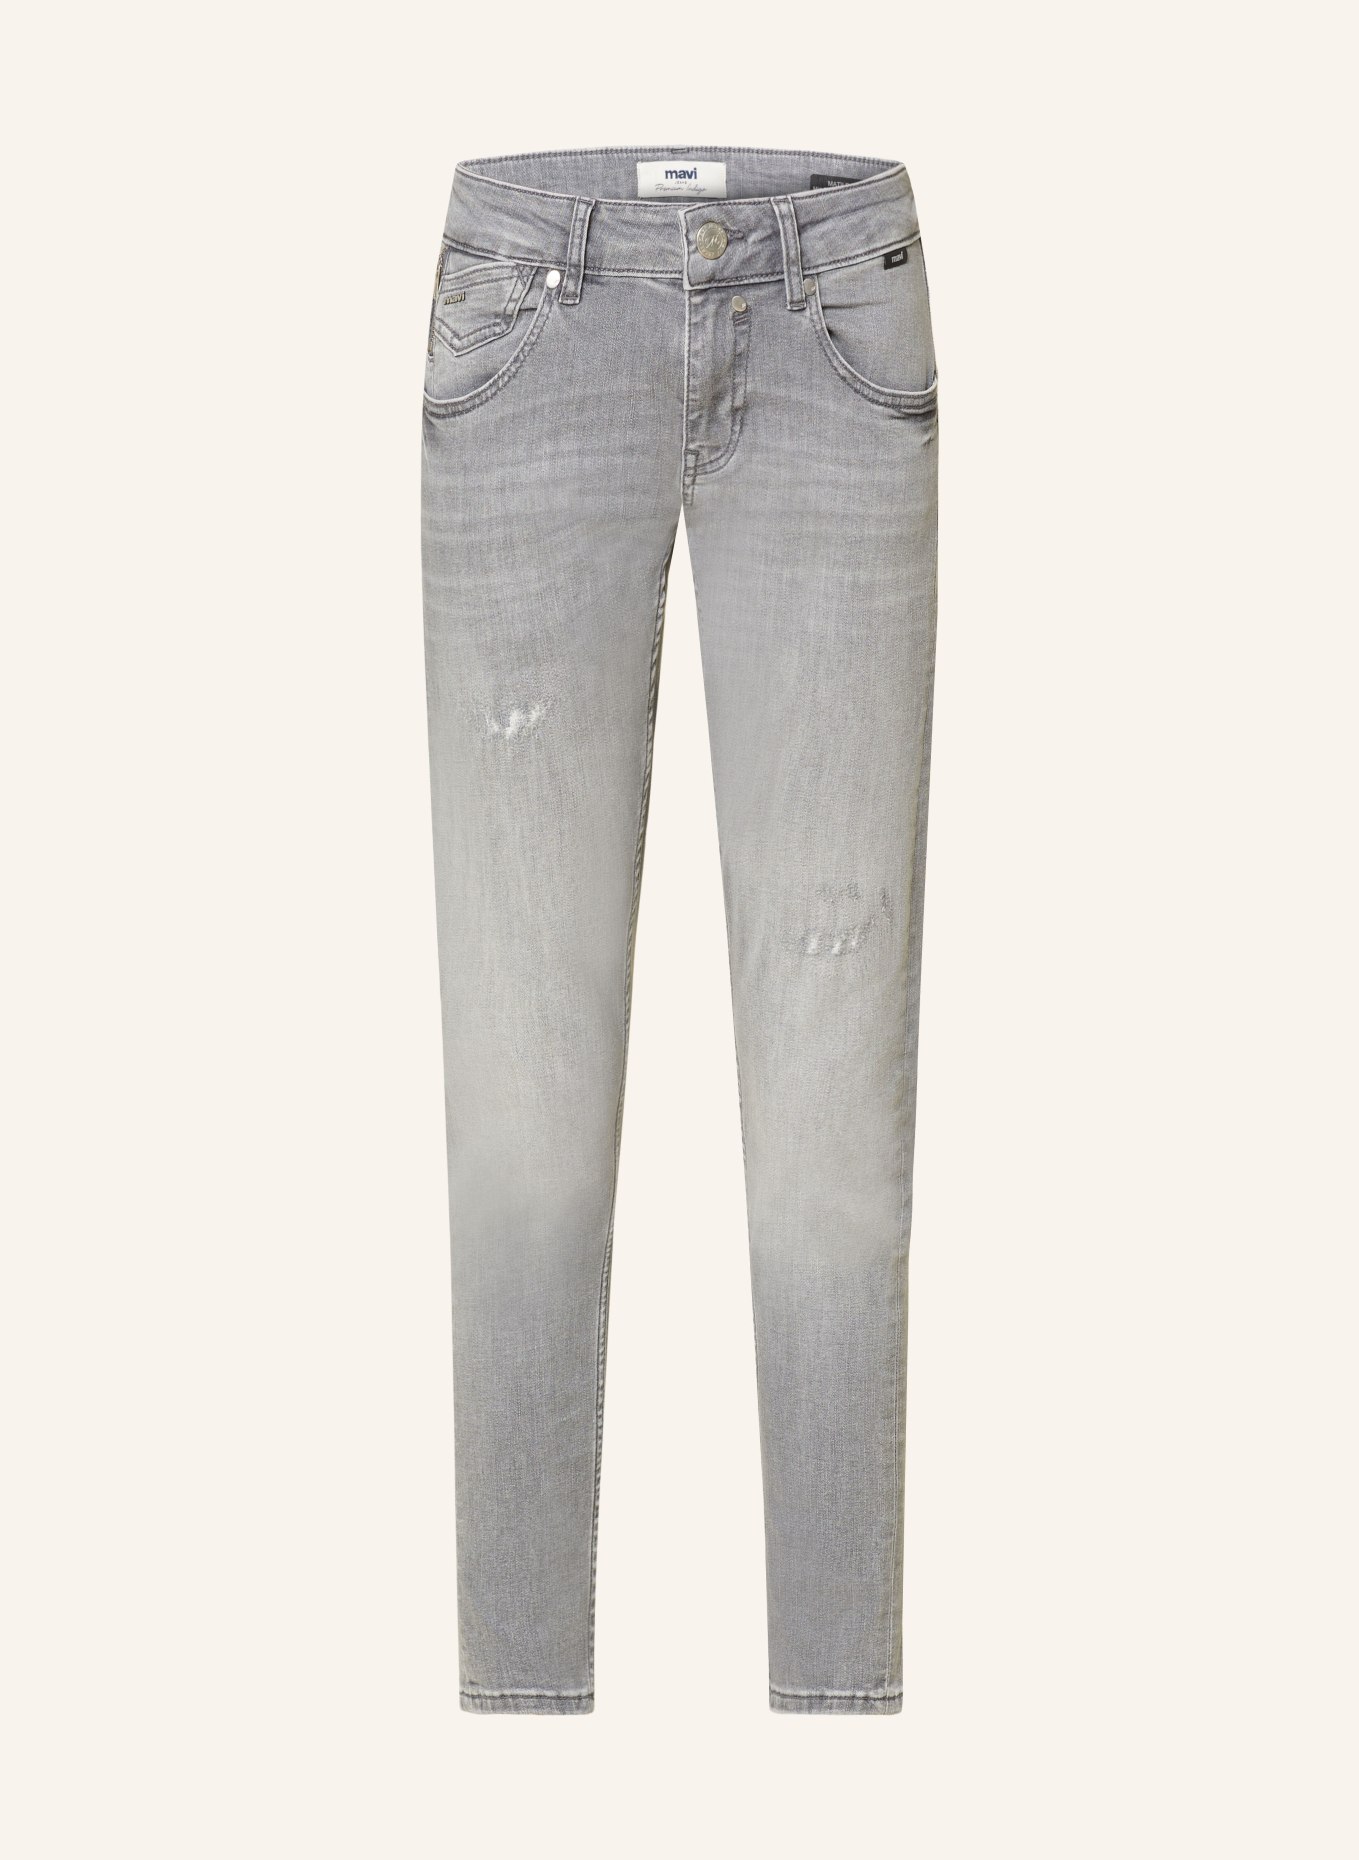 mavi 7/8-Jeans MATILDA, Farbe: 86874 grey brushed premium indigo (Bild 1)